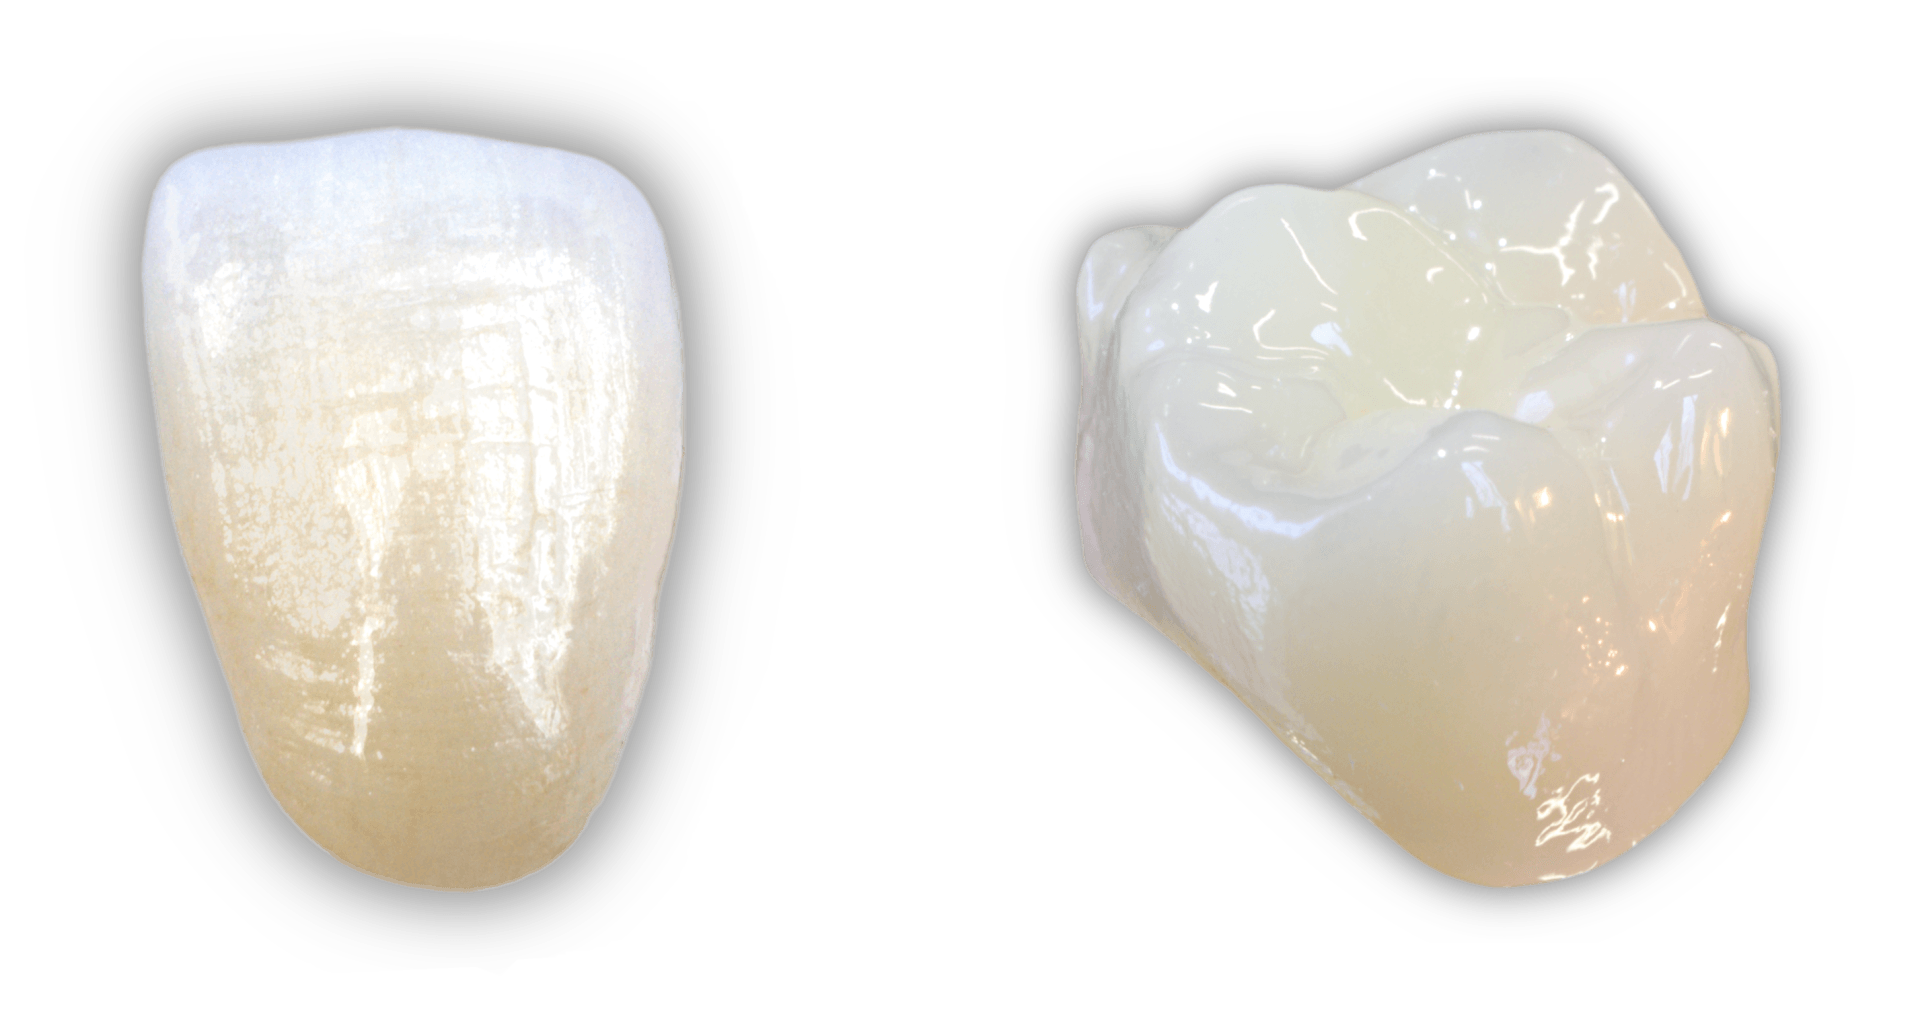 Festsitzender keramischer Zahnersatz aus Zirkonoxid